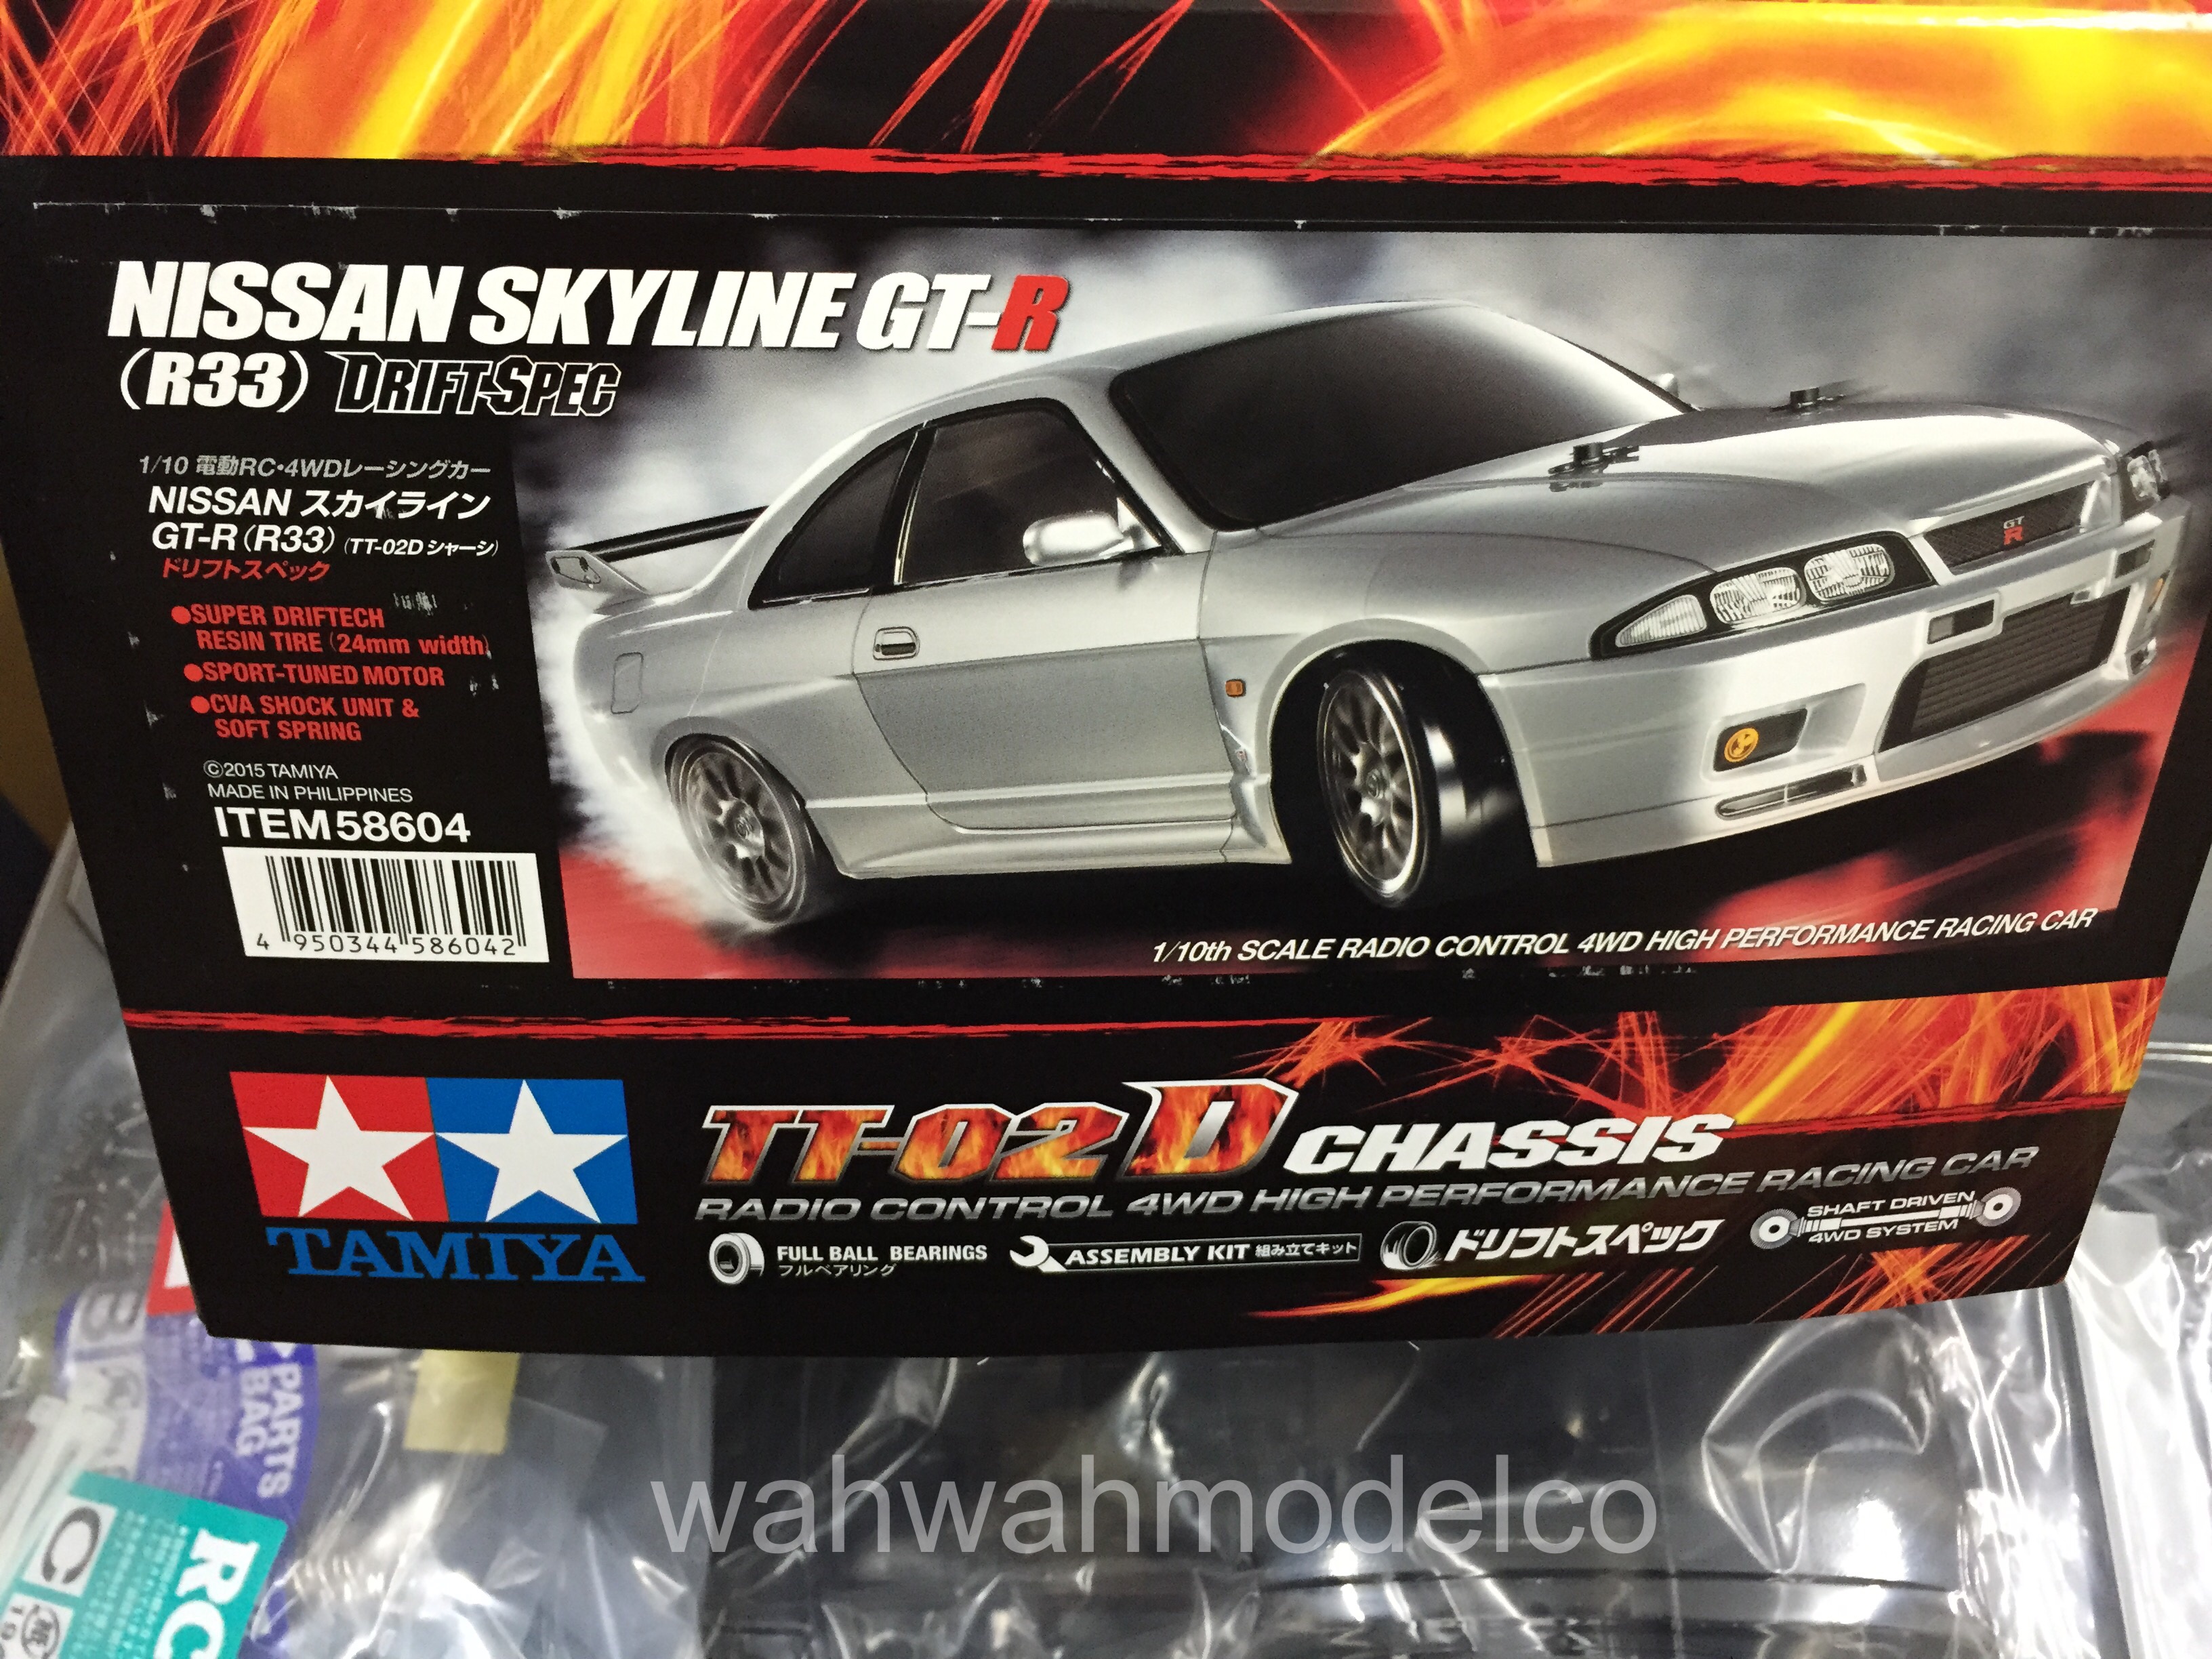 TT-02D   NEW IN BOX TAMIYA # 58604  RC Nissan Skyline GT-R R33 